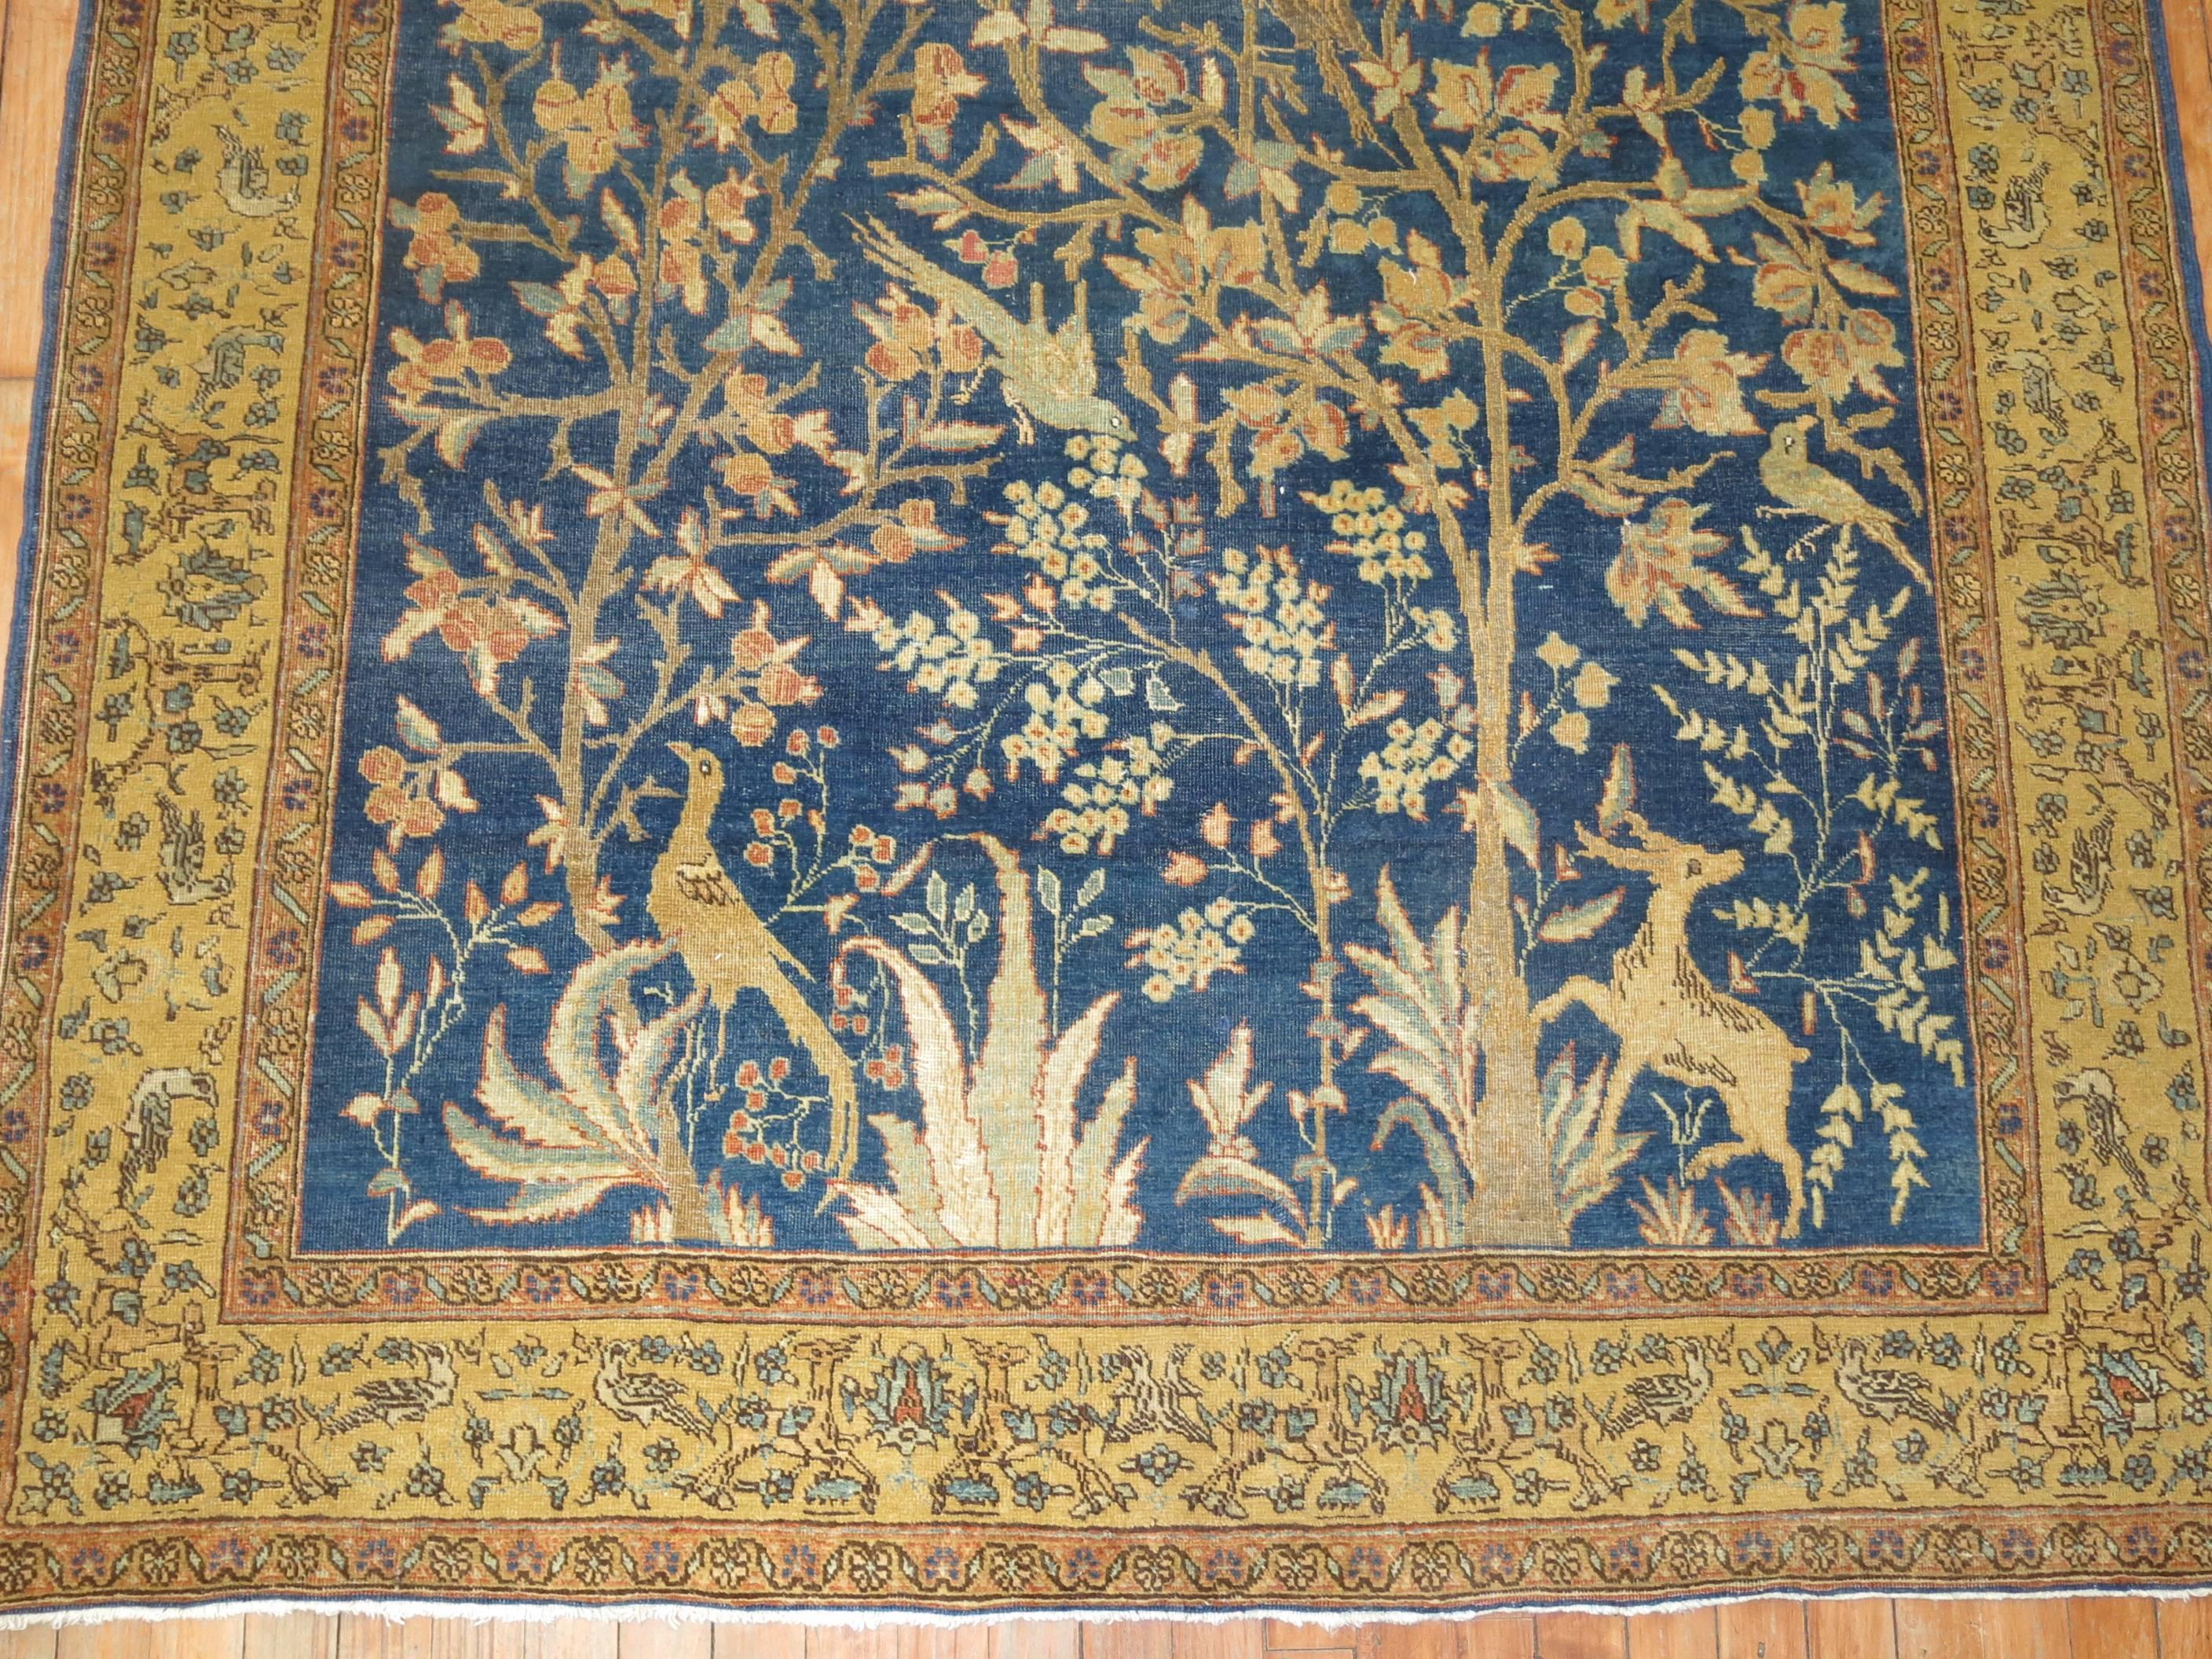 Pictorial Antique Persian Tabriz Carpet in Blue 2